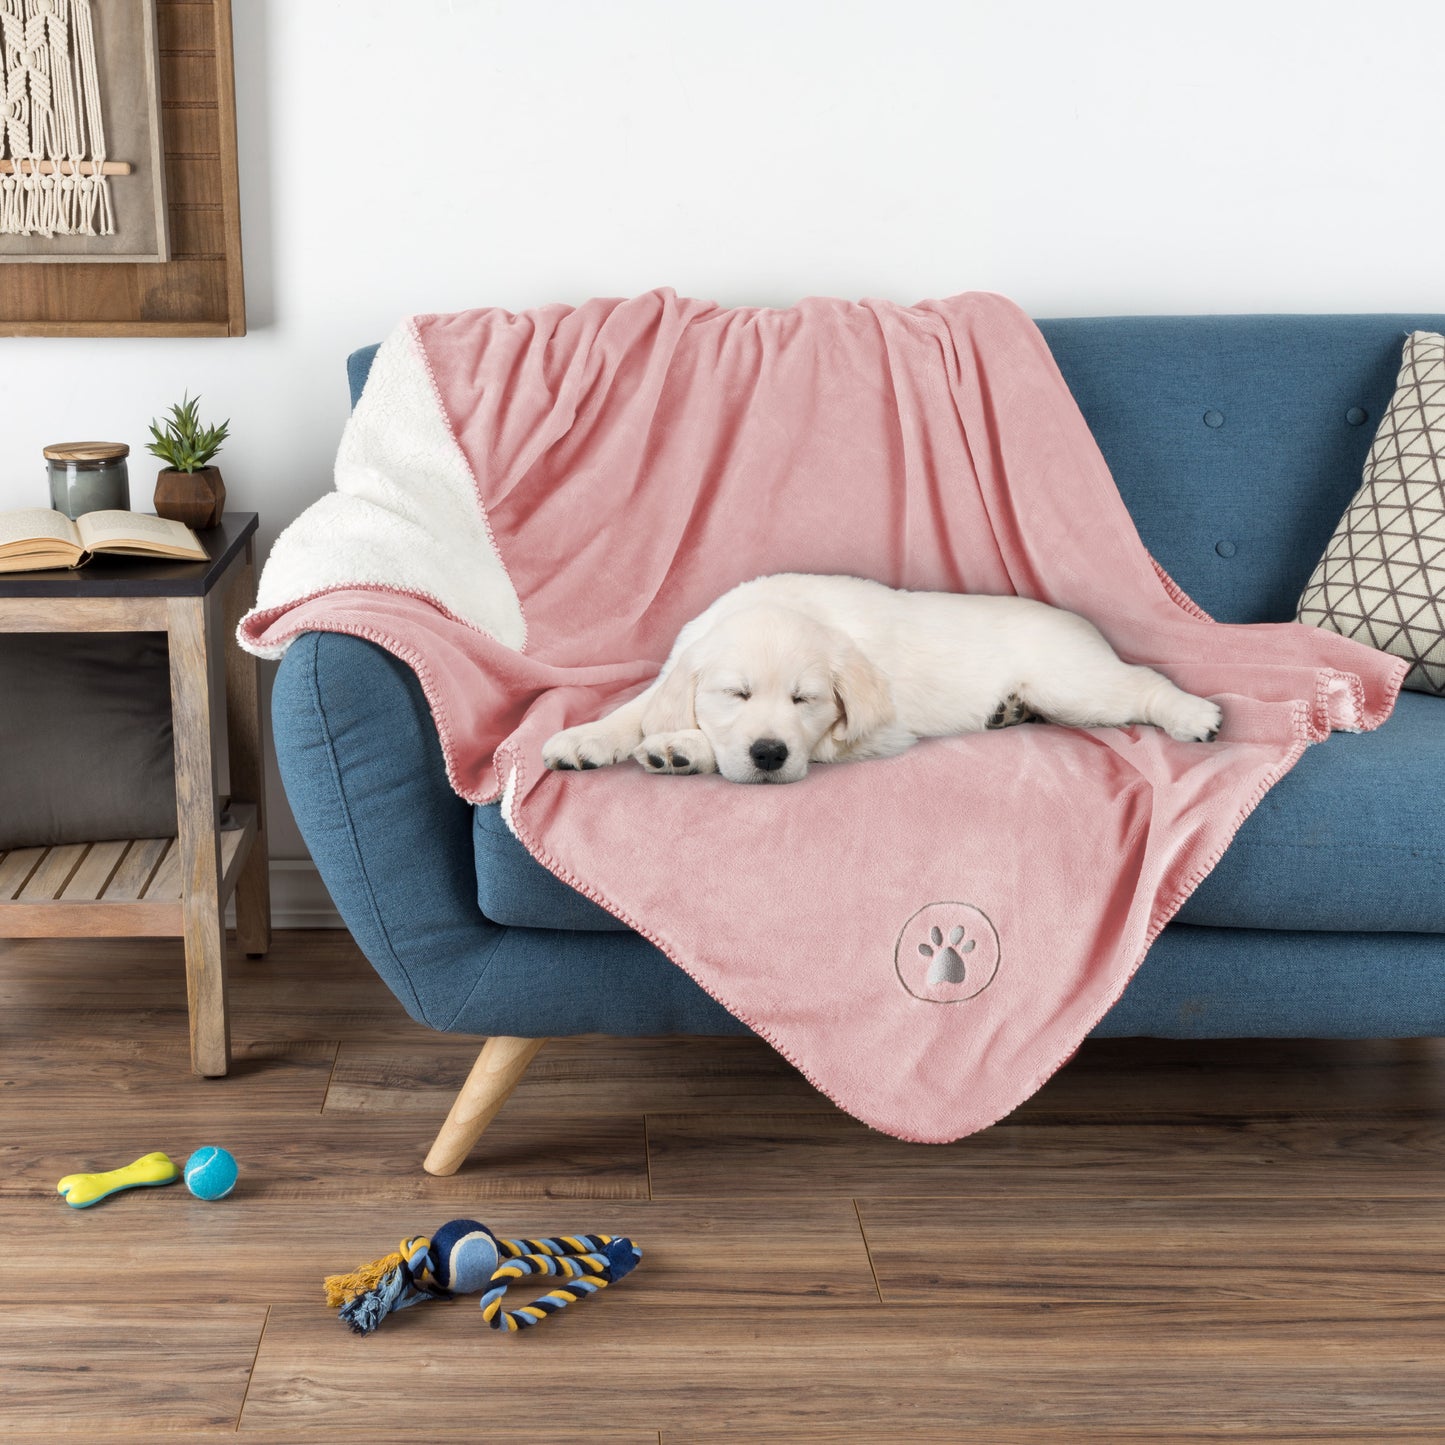 PETMAKER 50x60-Inch Waterproof Dog Blanket, Pink